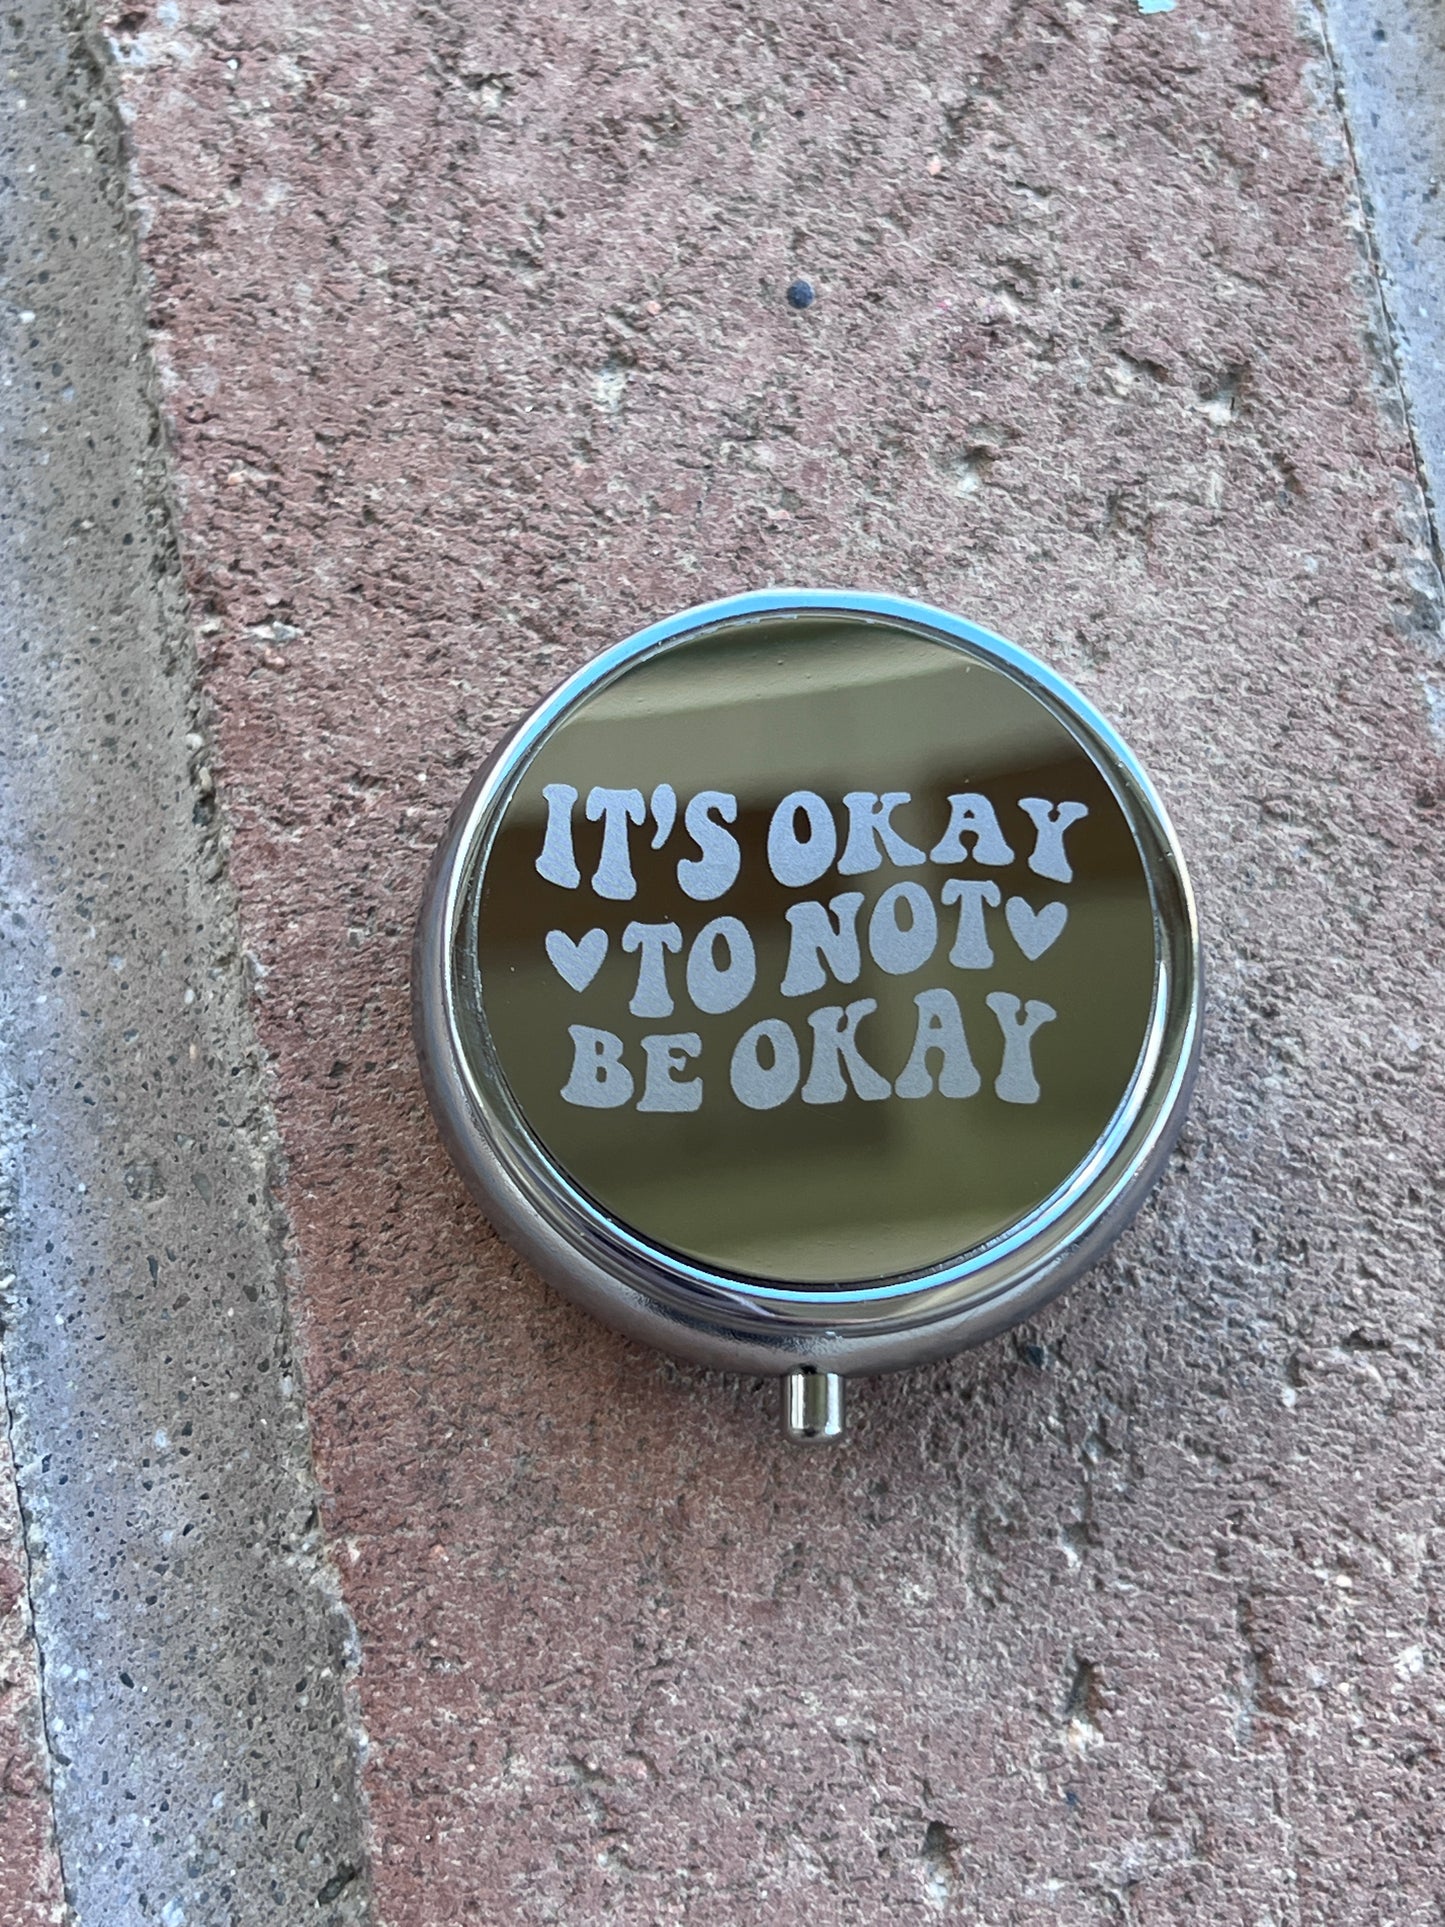 It’s Okay to Not Be Okay | Pill / Trinket / Medicine Box